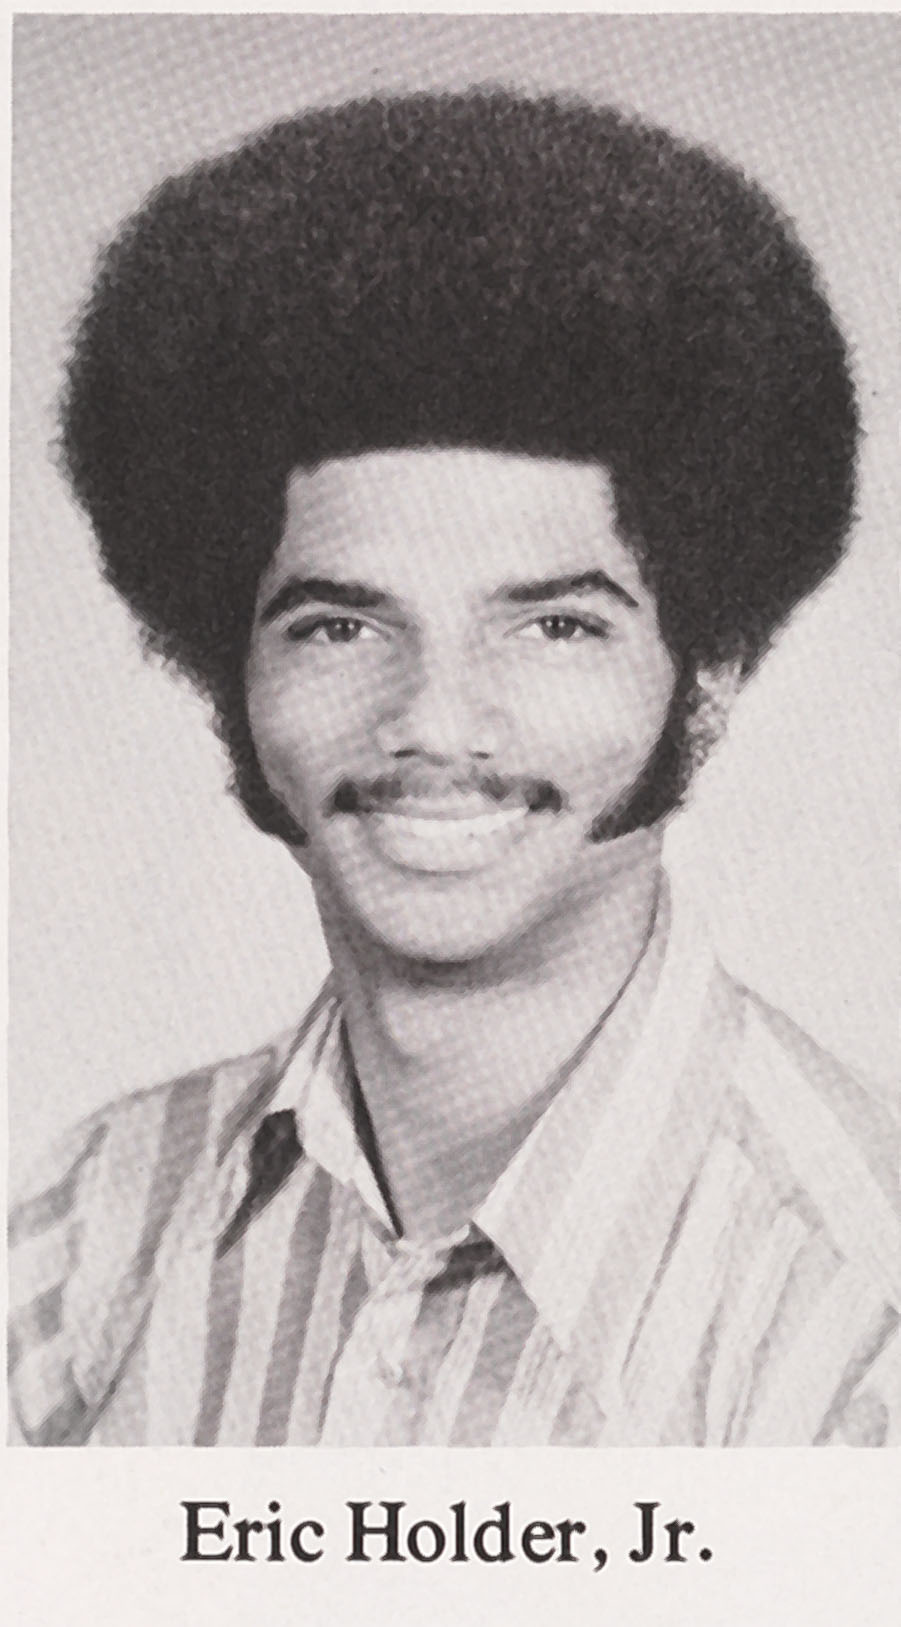 Eric Holder's 1973 Columbia yearbook photo